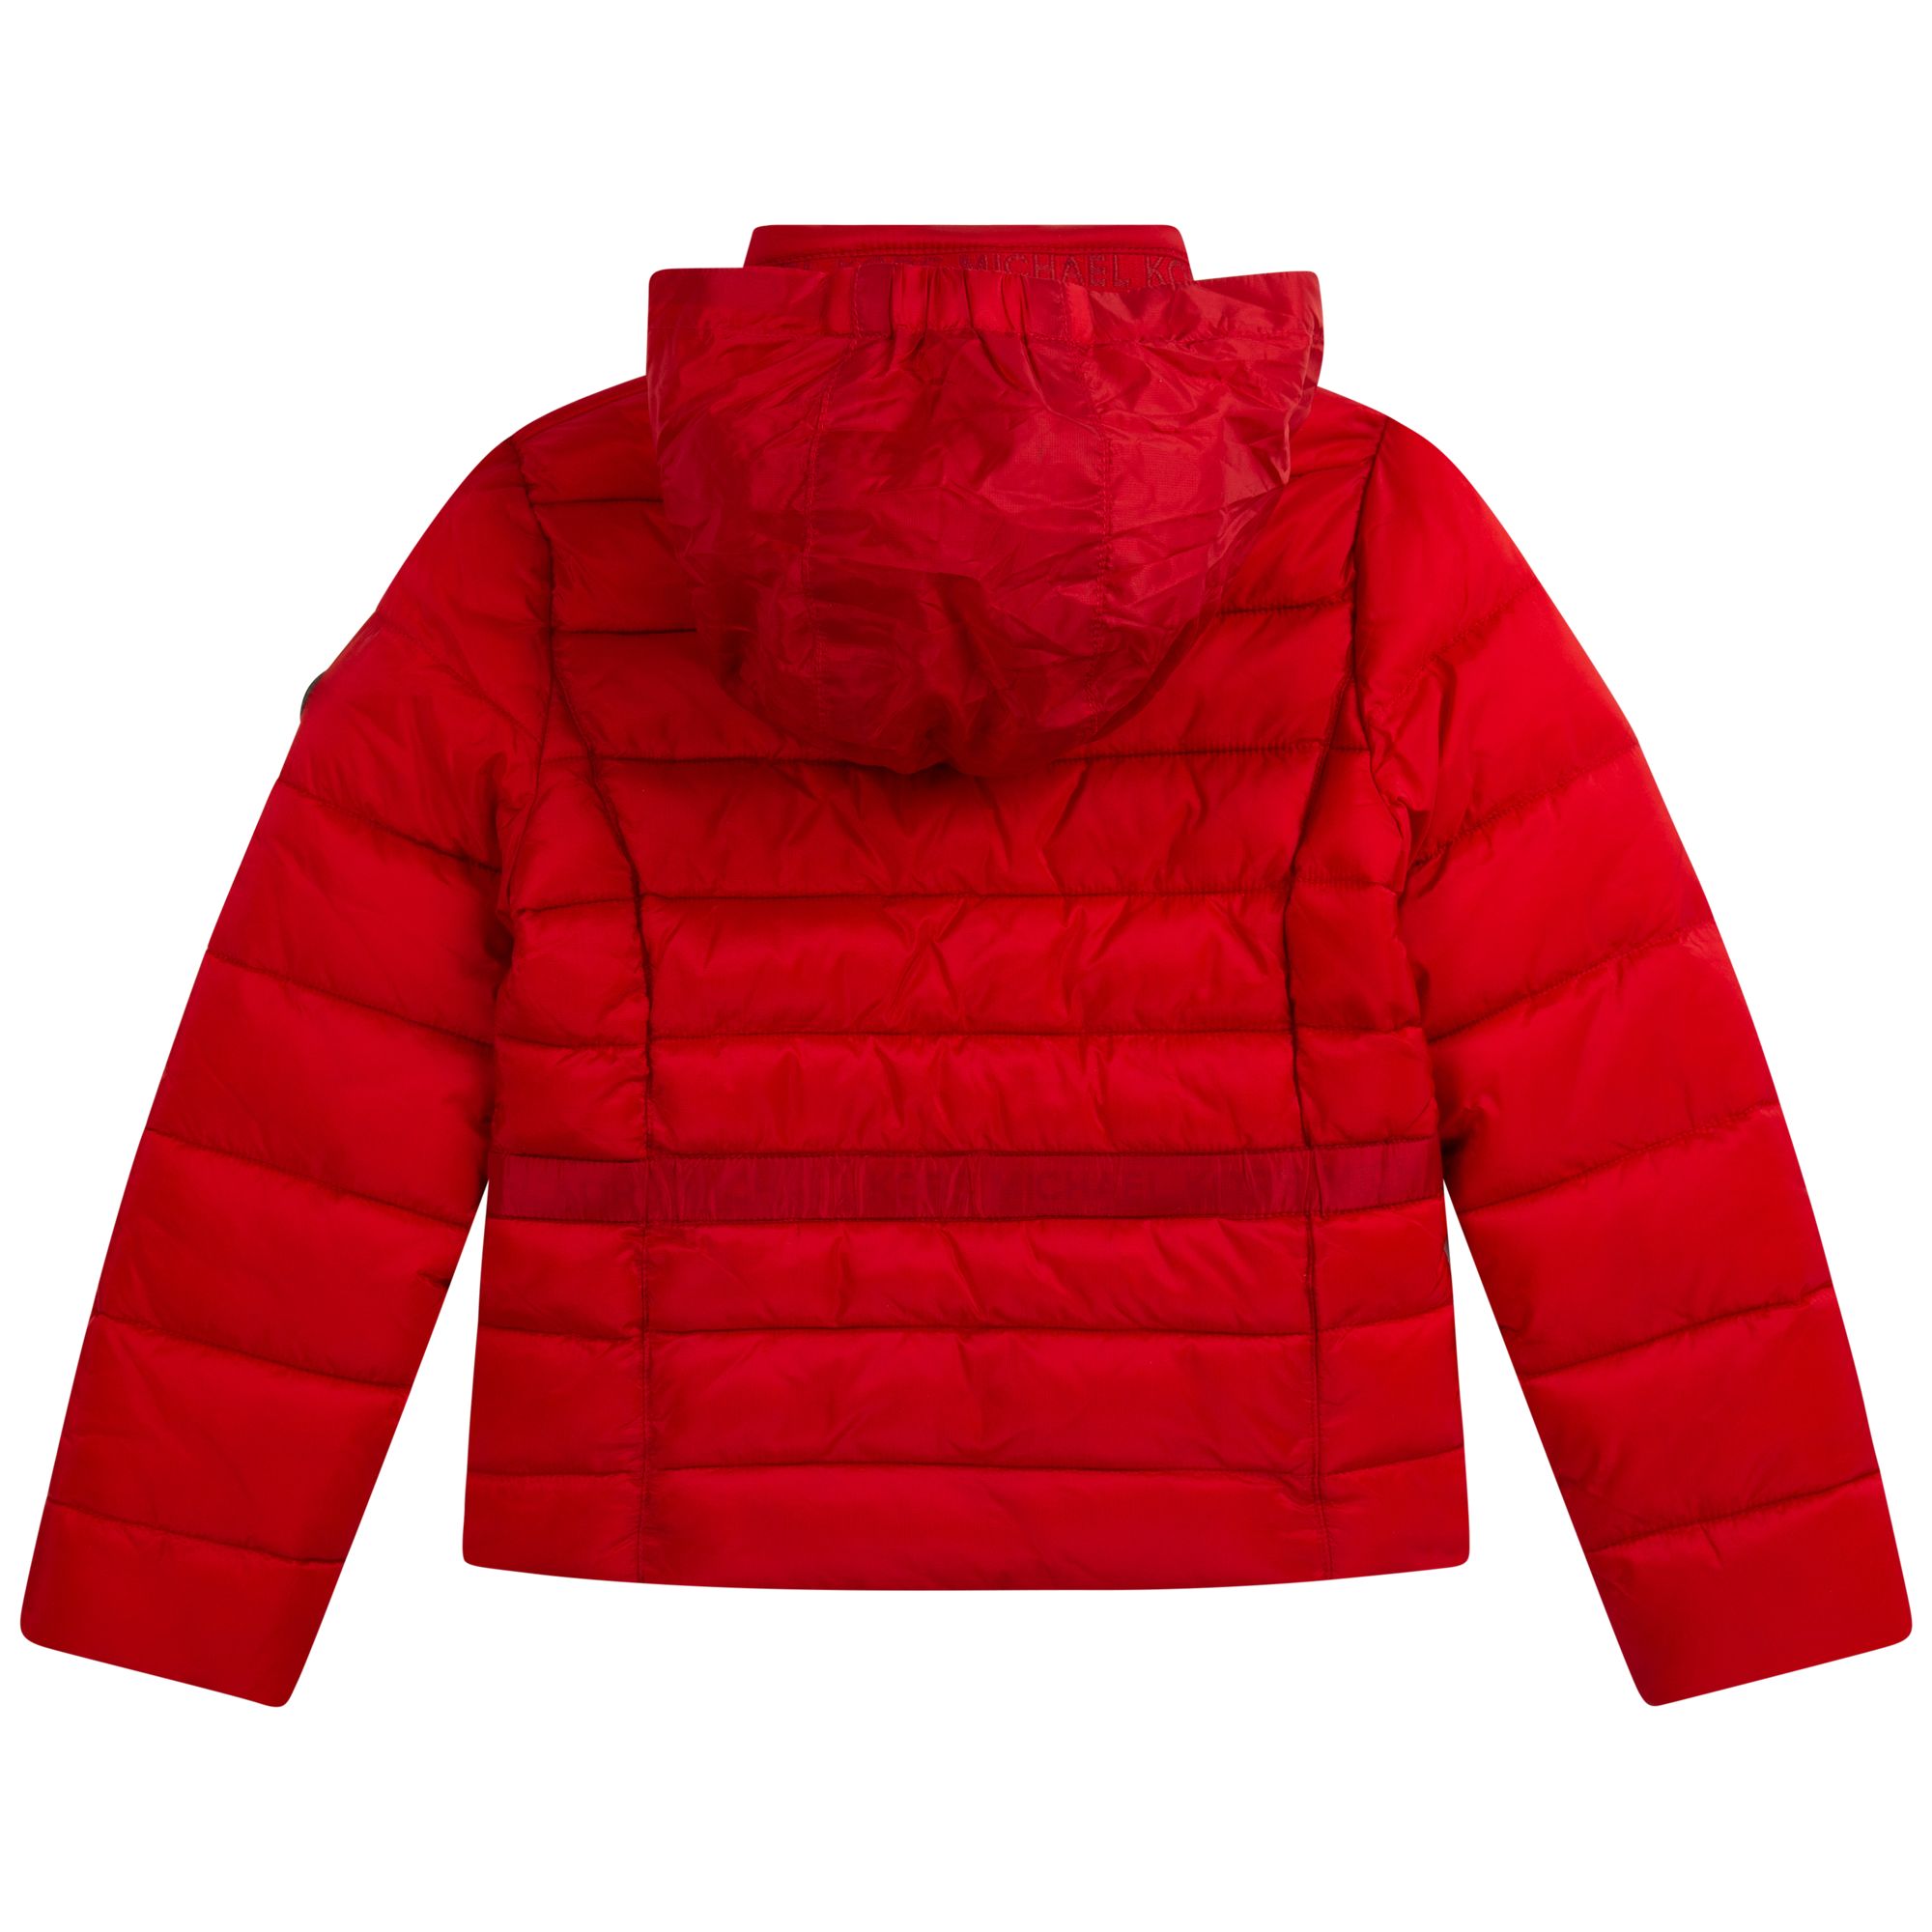 MICHAEL KORS Hooded puffer jacket girl | Kids around